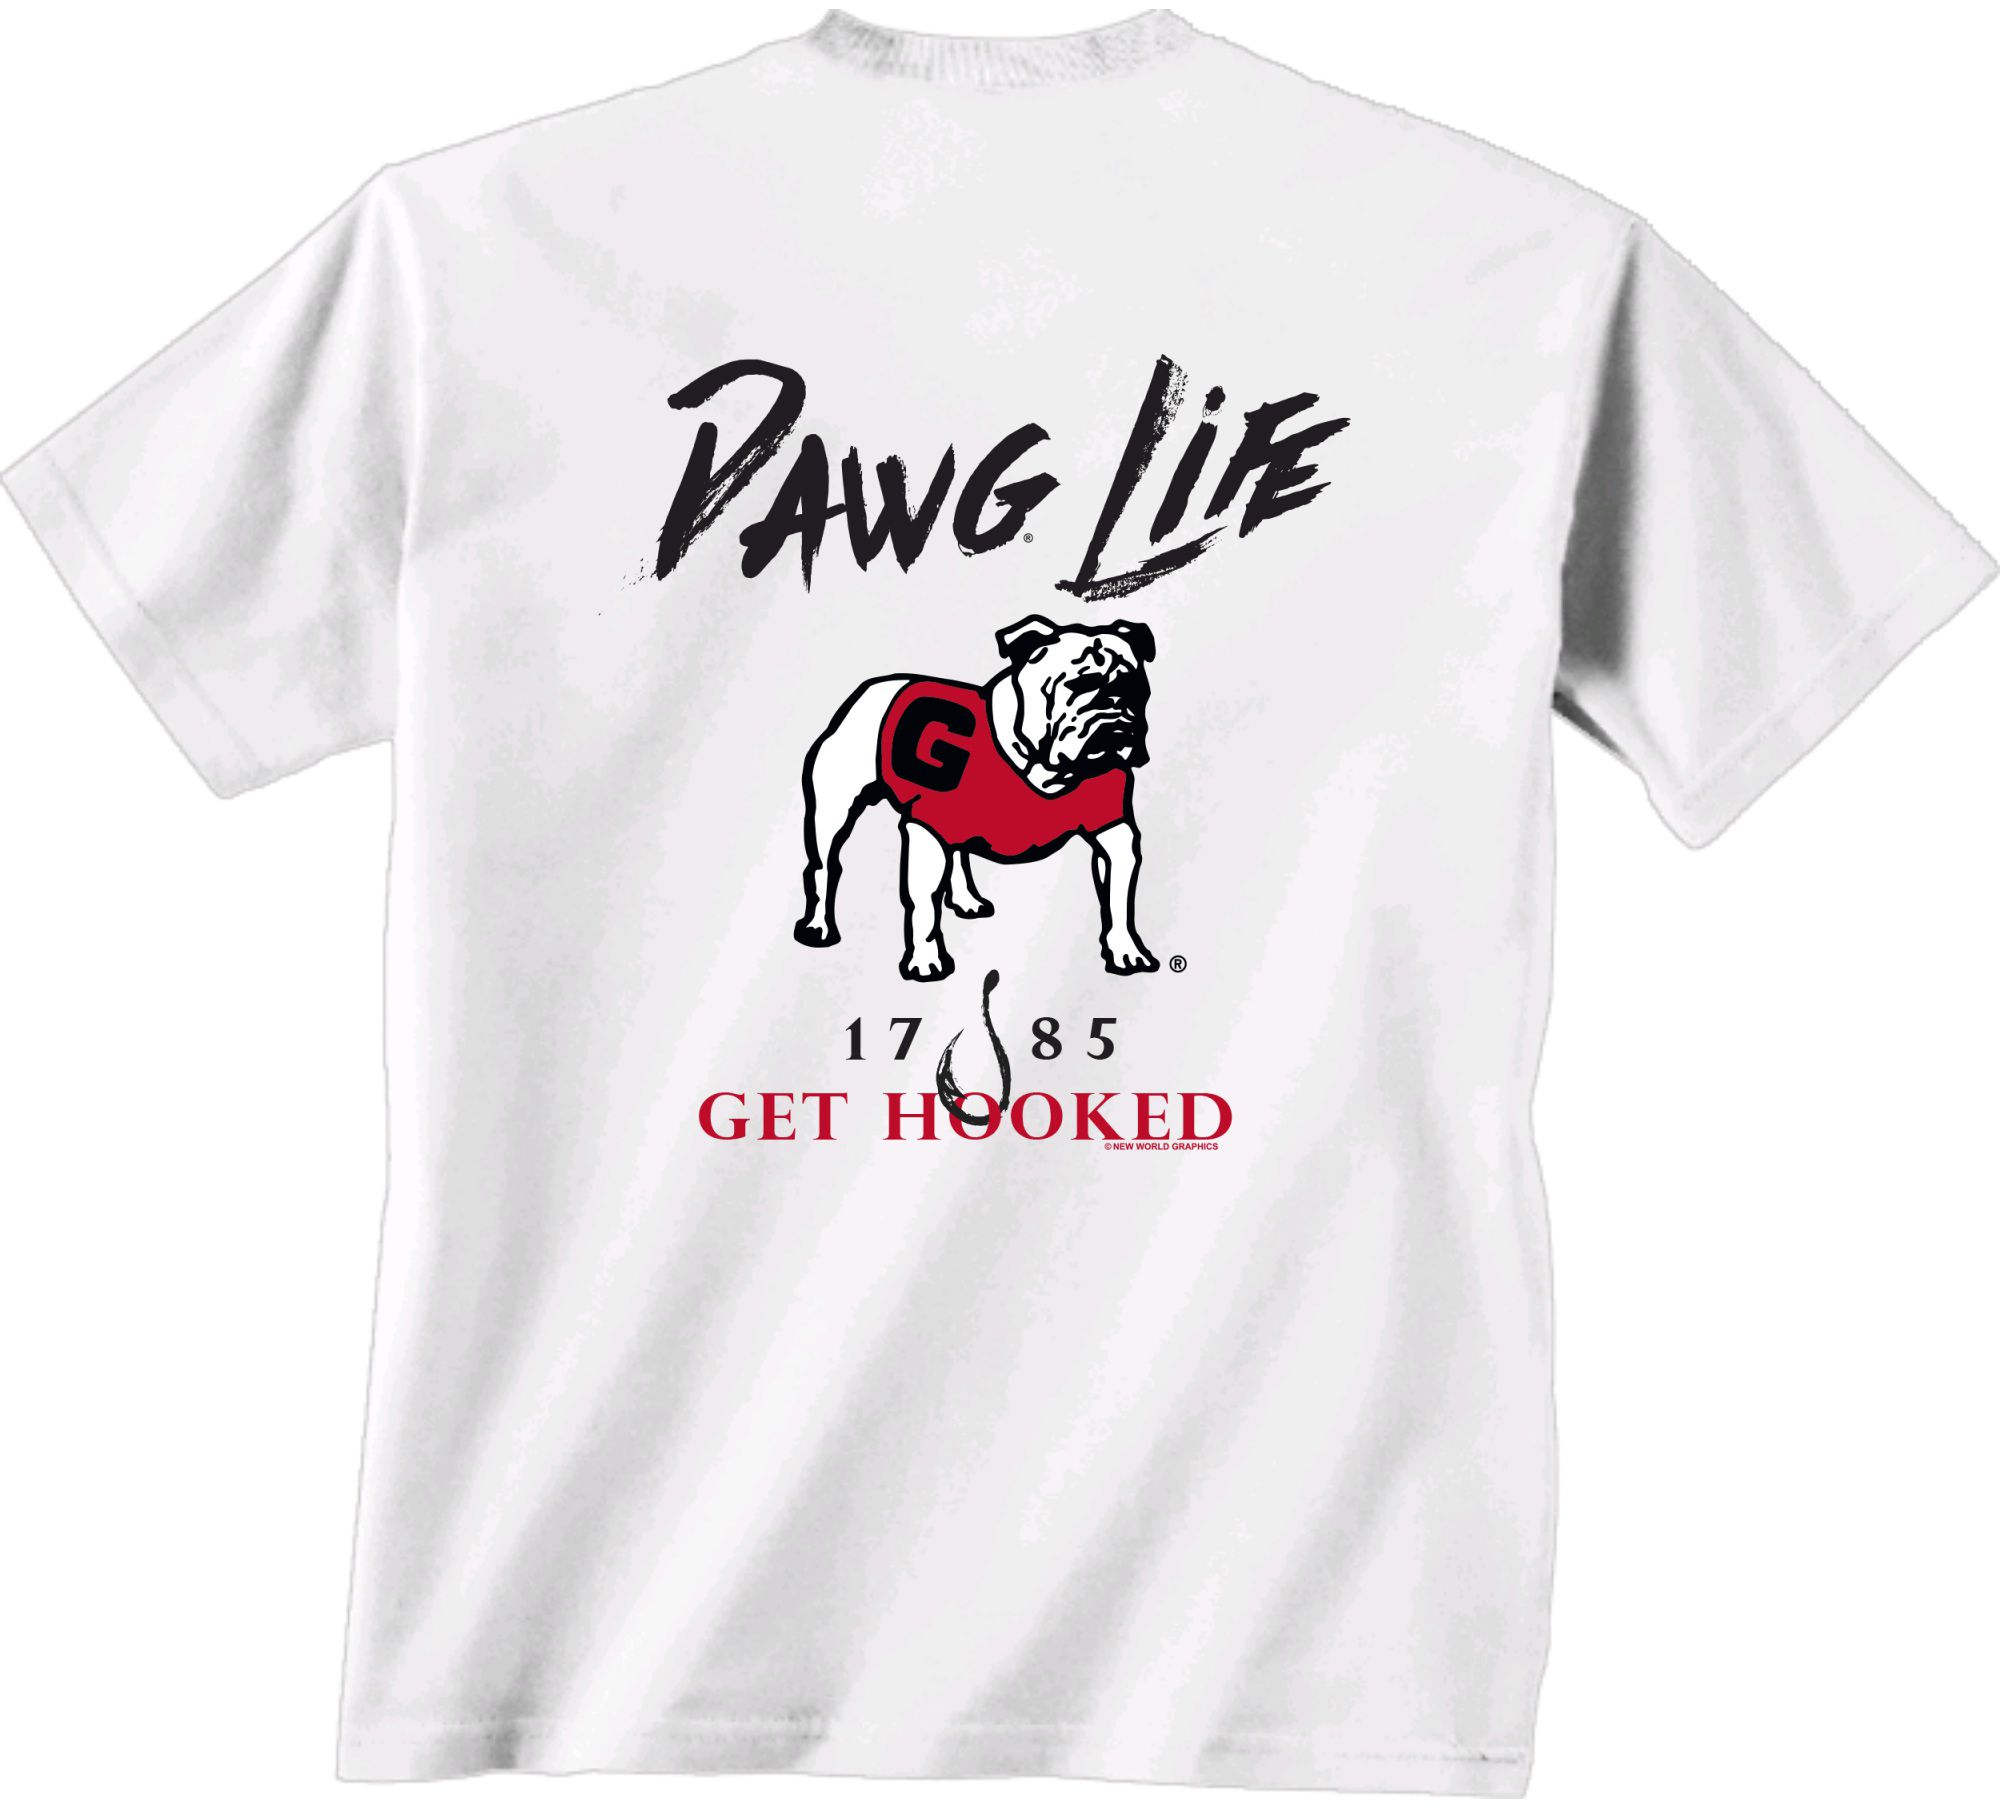 New World Graphics Men's Georgia Bulldogs Get Hooked White T-Shirt